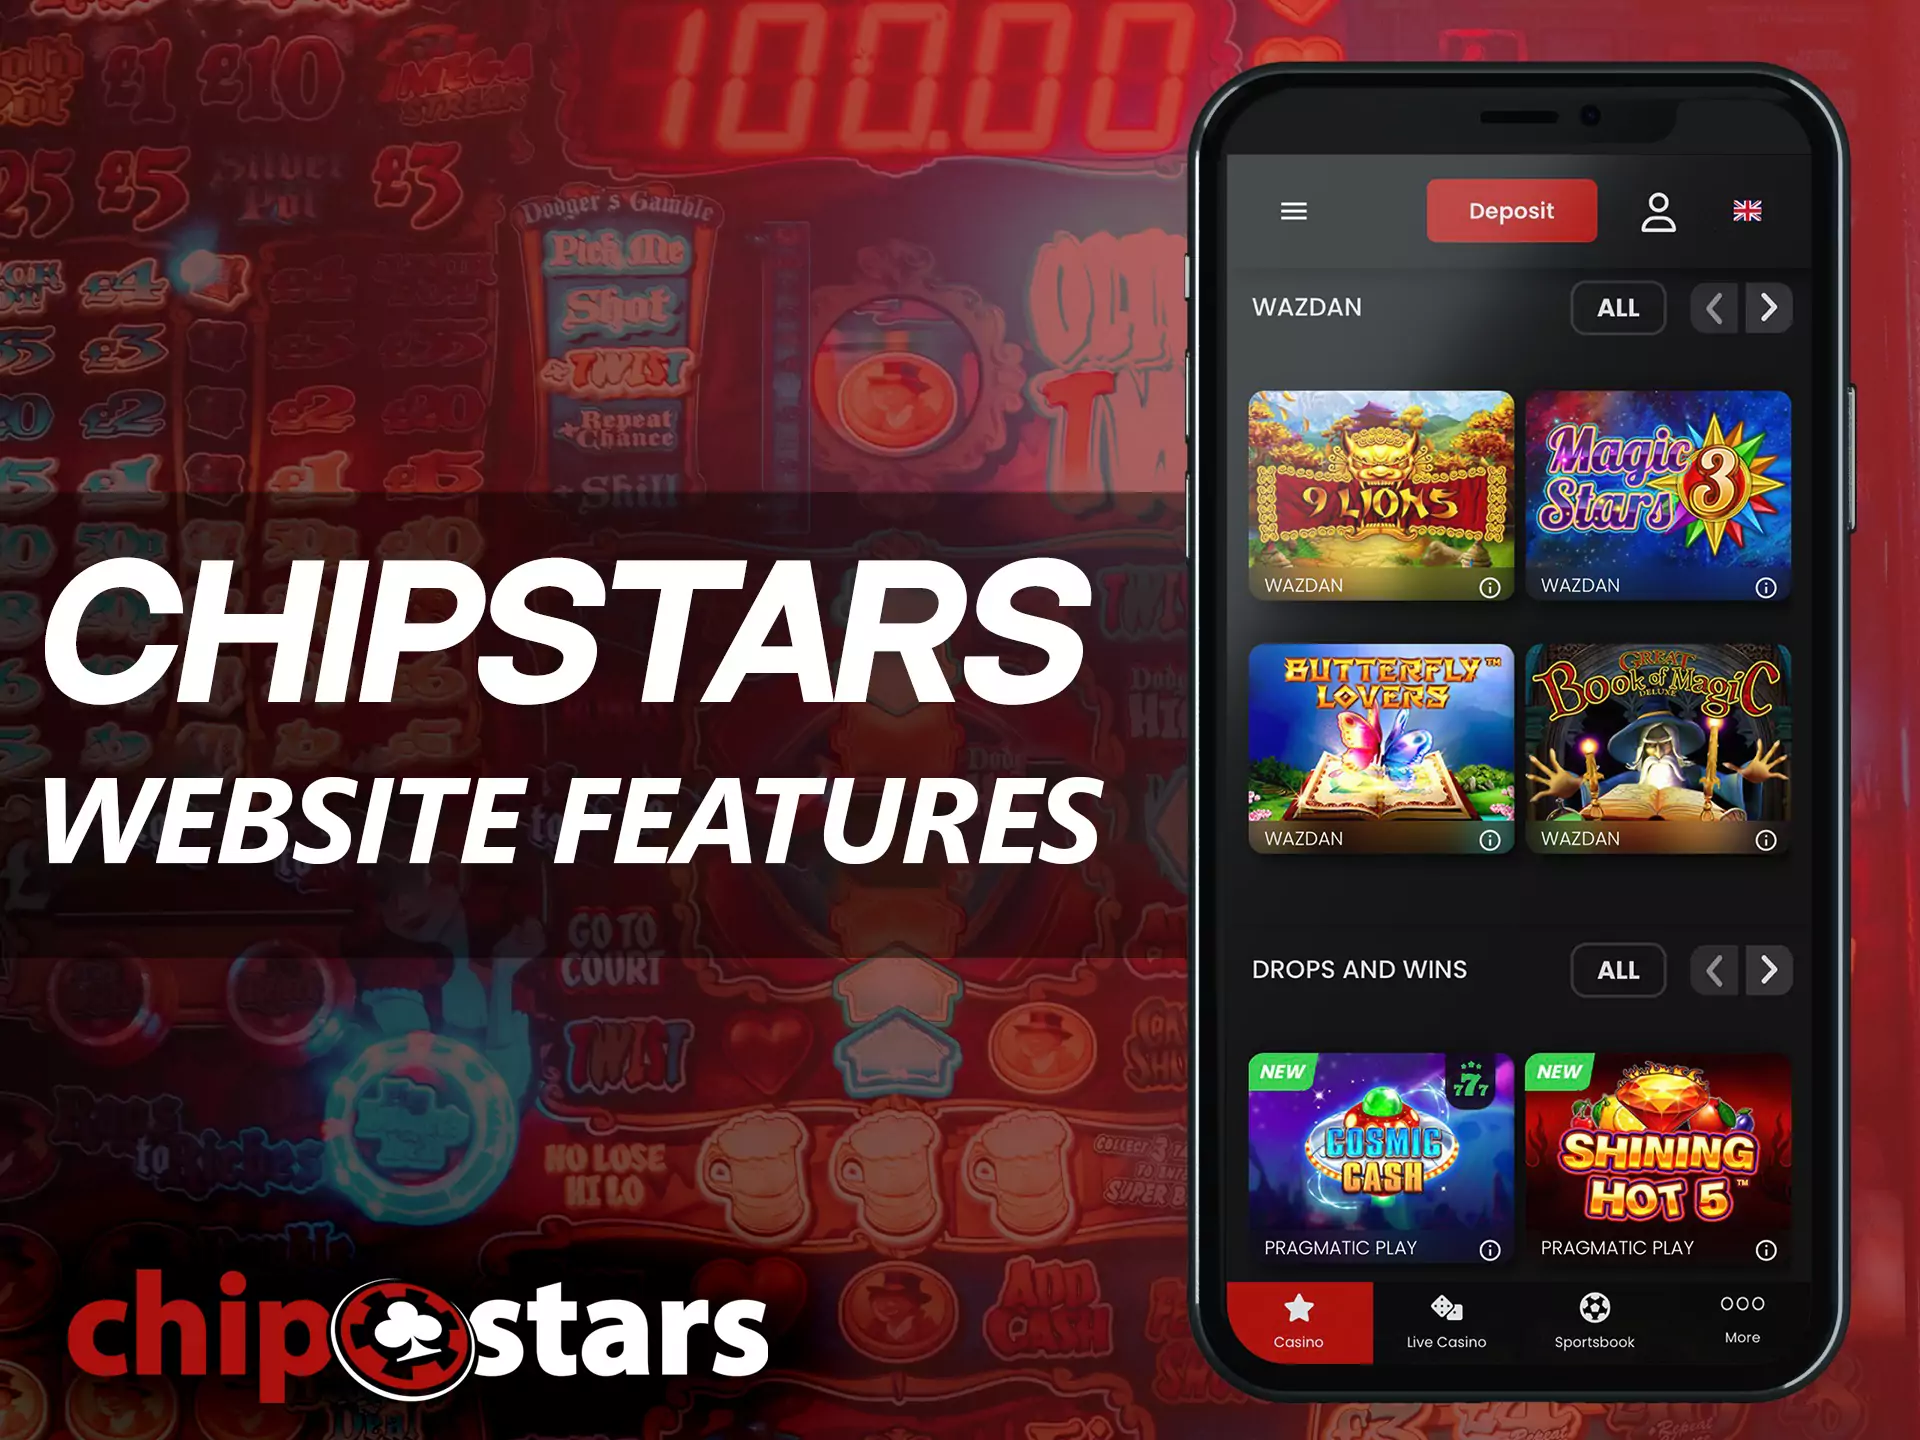 The Chipstars mobile website greatly works on modern smartphones.